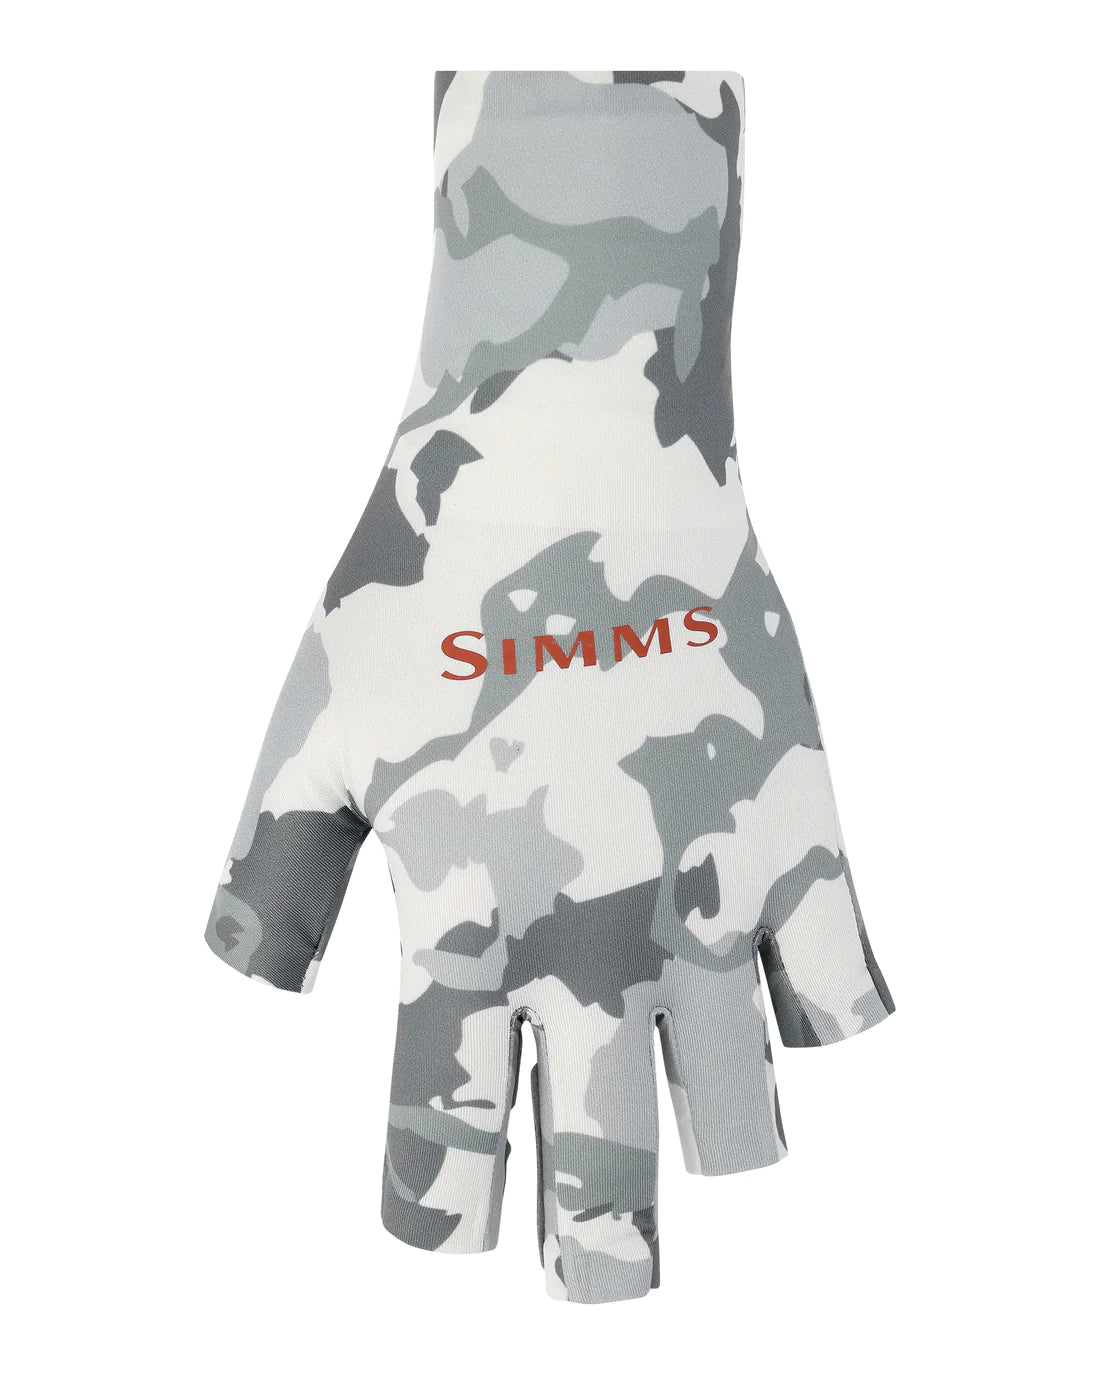 Simms SolarFlex SunGlove Regiment Camo Cinder / XS